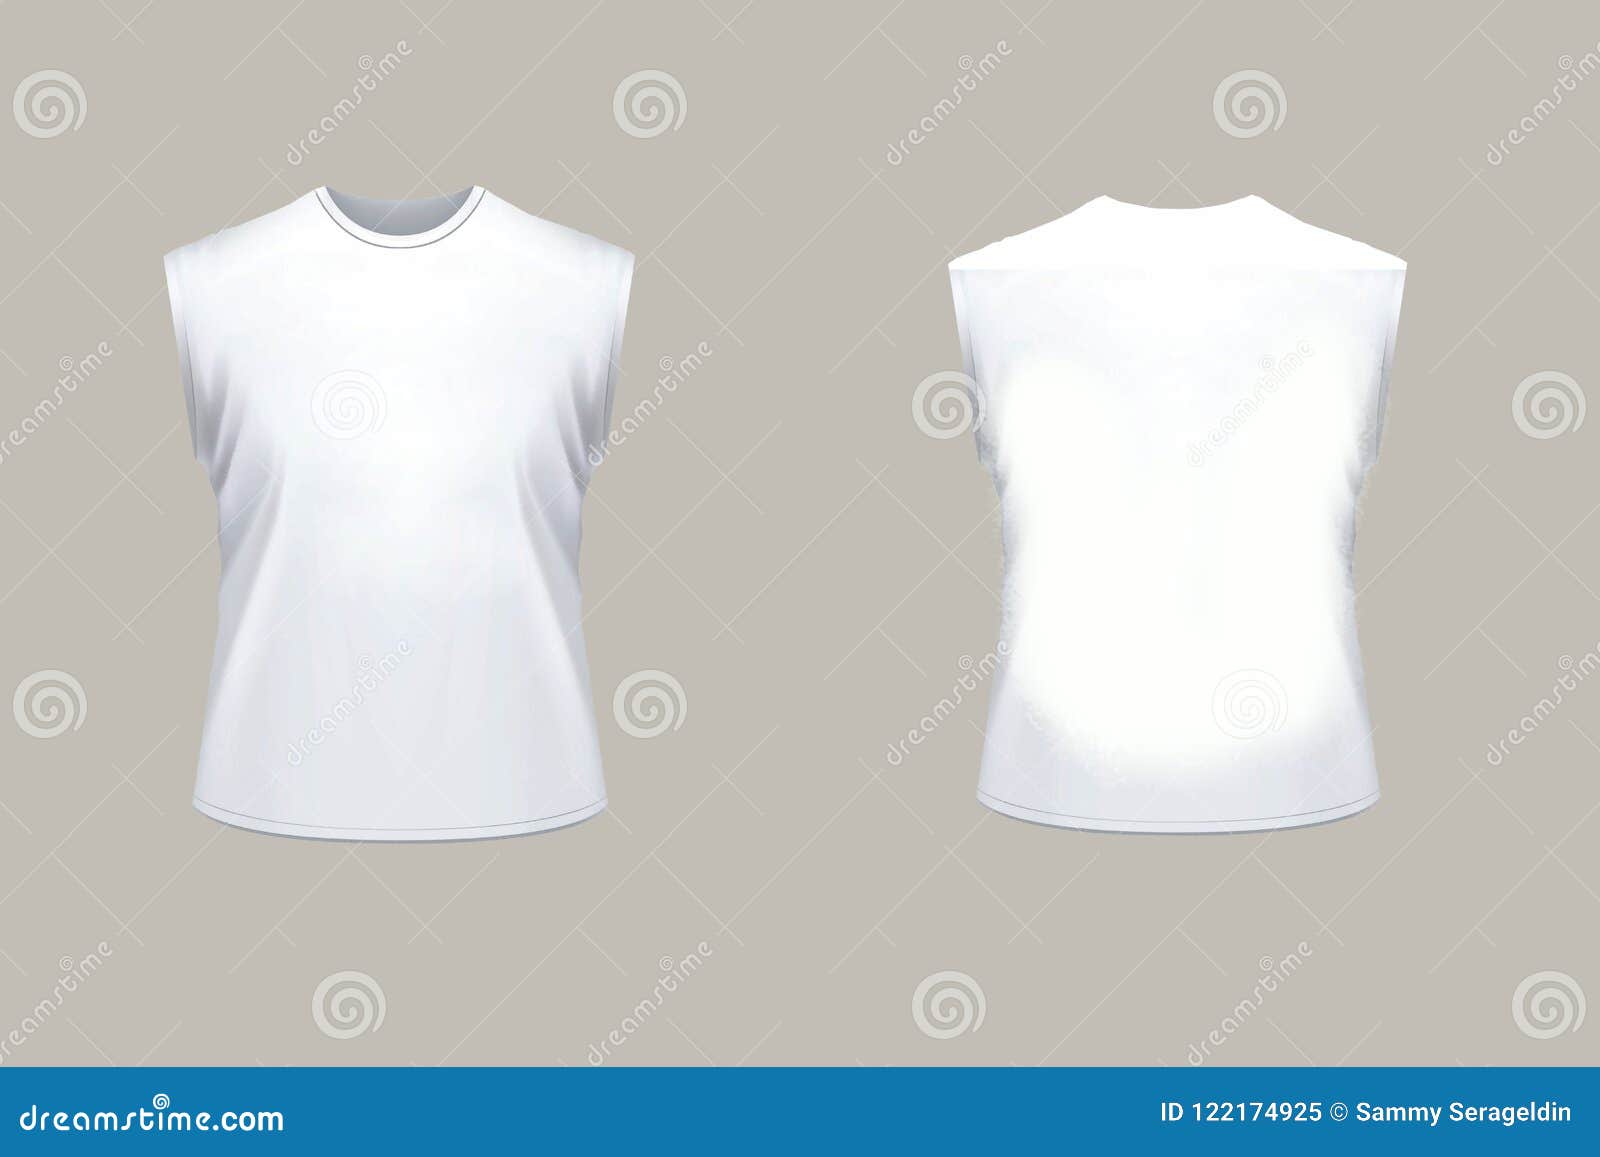 Download Blank White Sleeveless Shirt Mock Up Template Stock ...